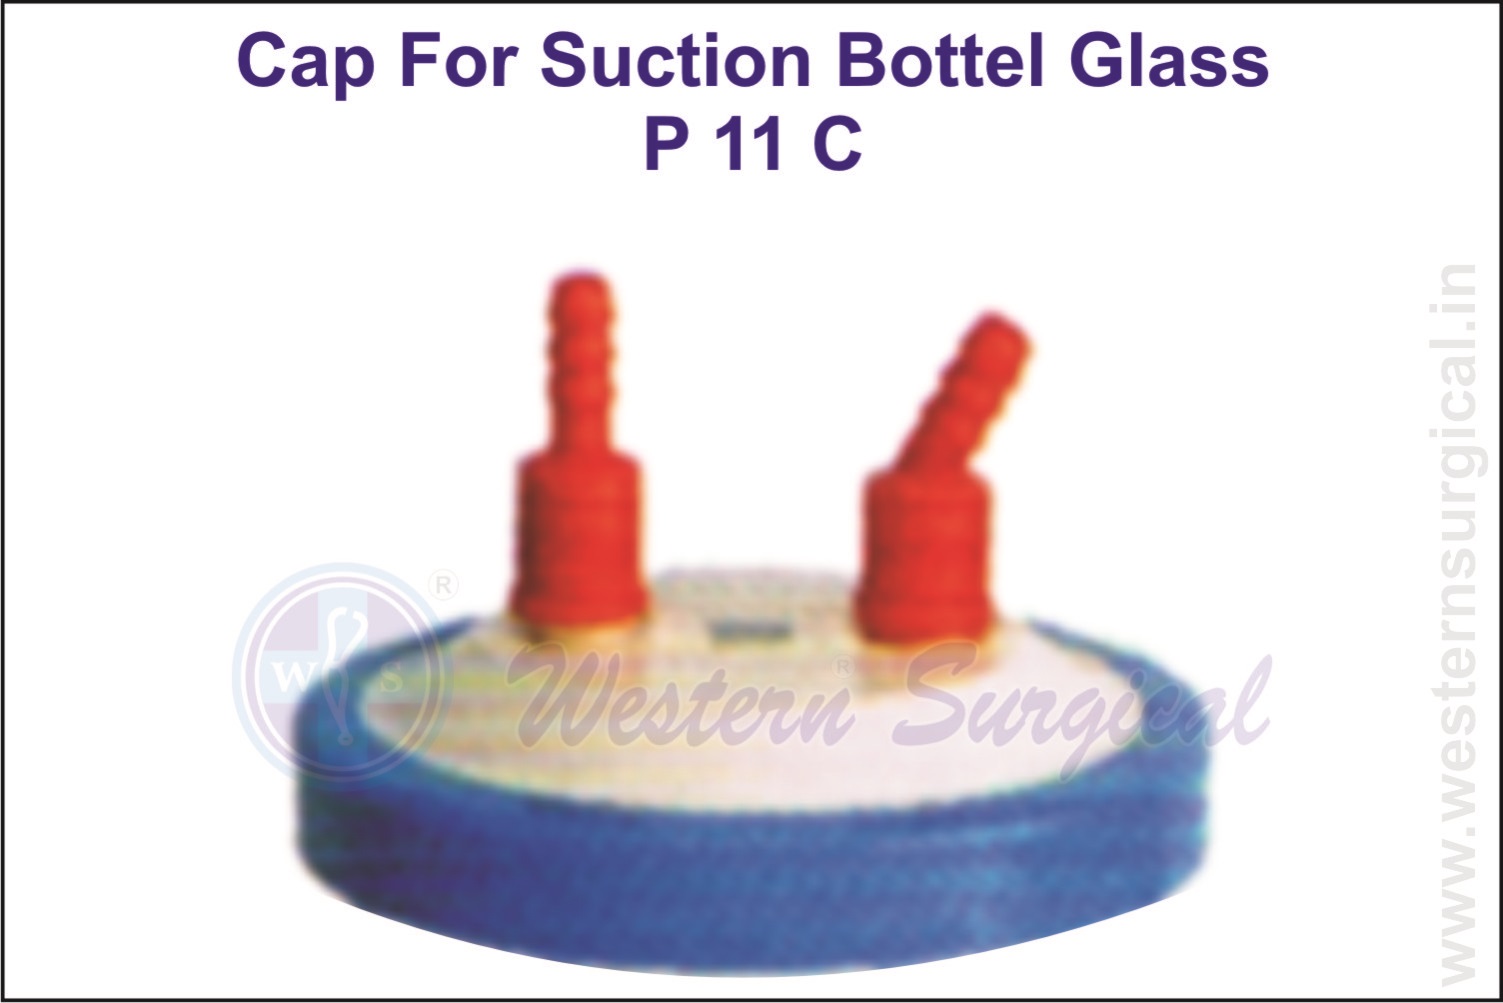 CAP FOR SUCTION BOTTEL GLASS